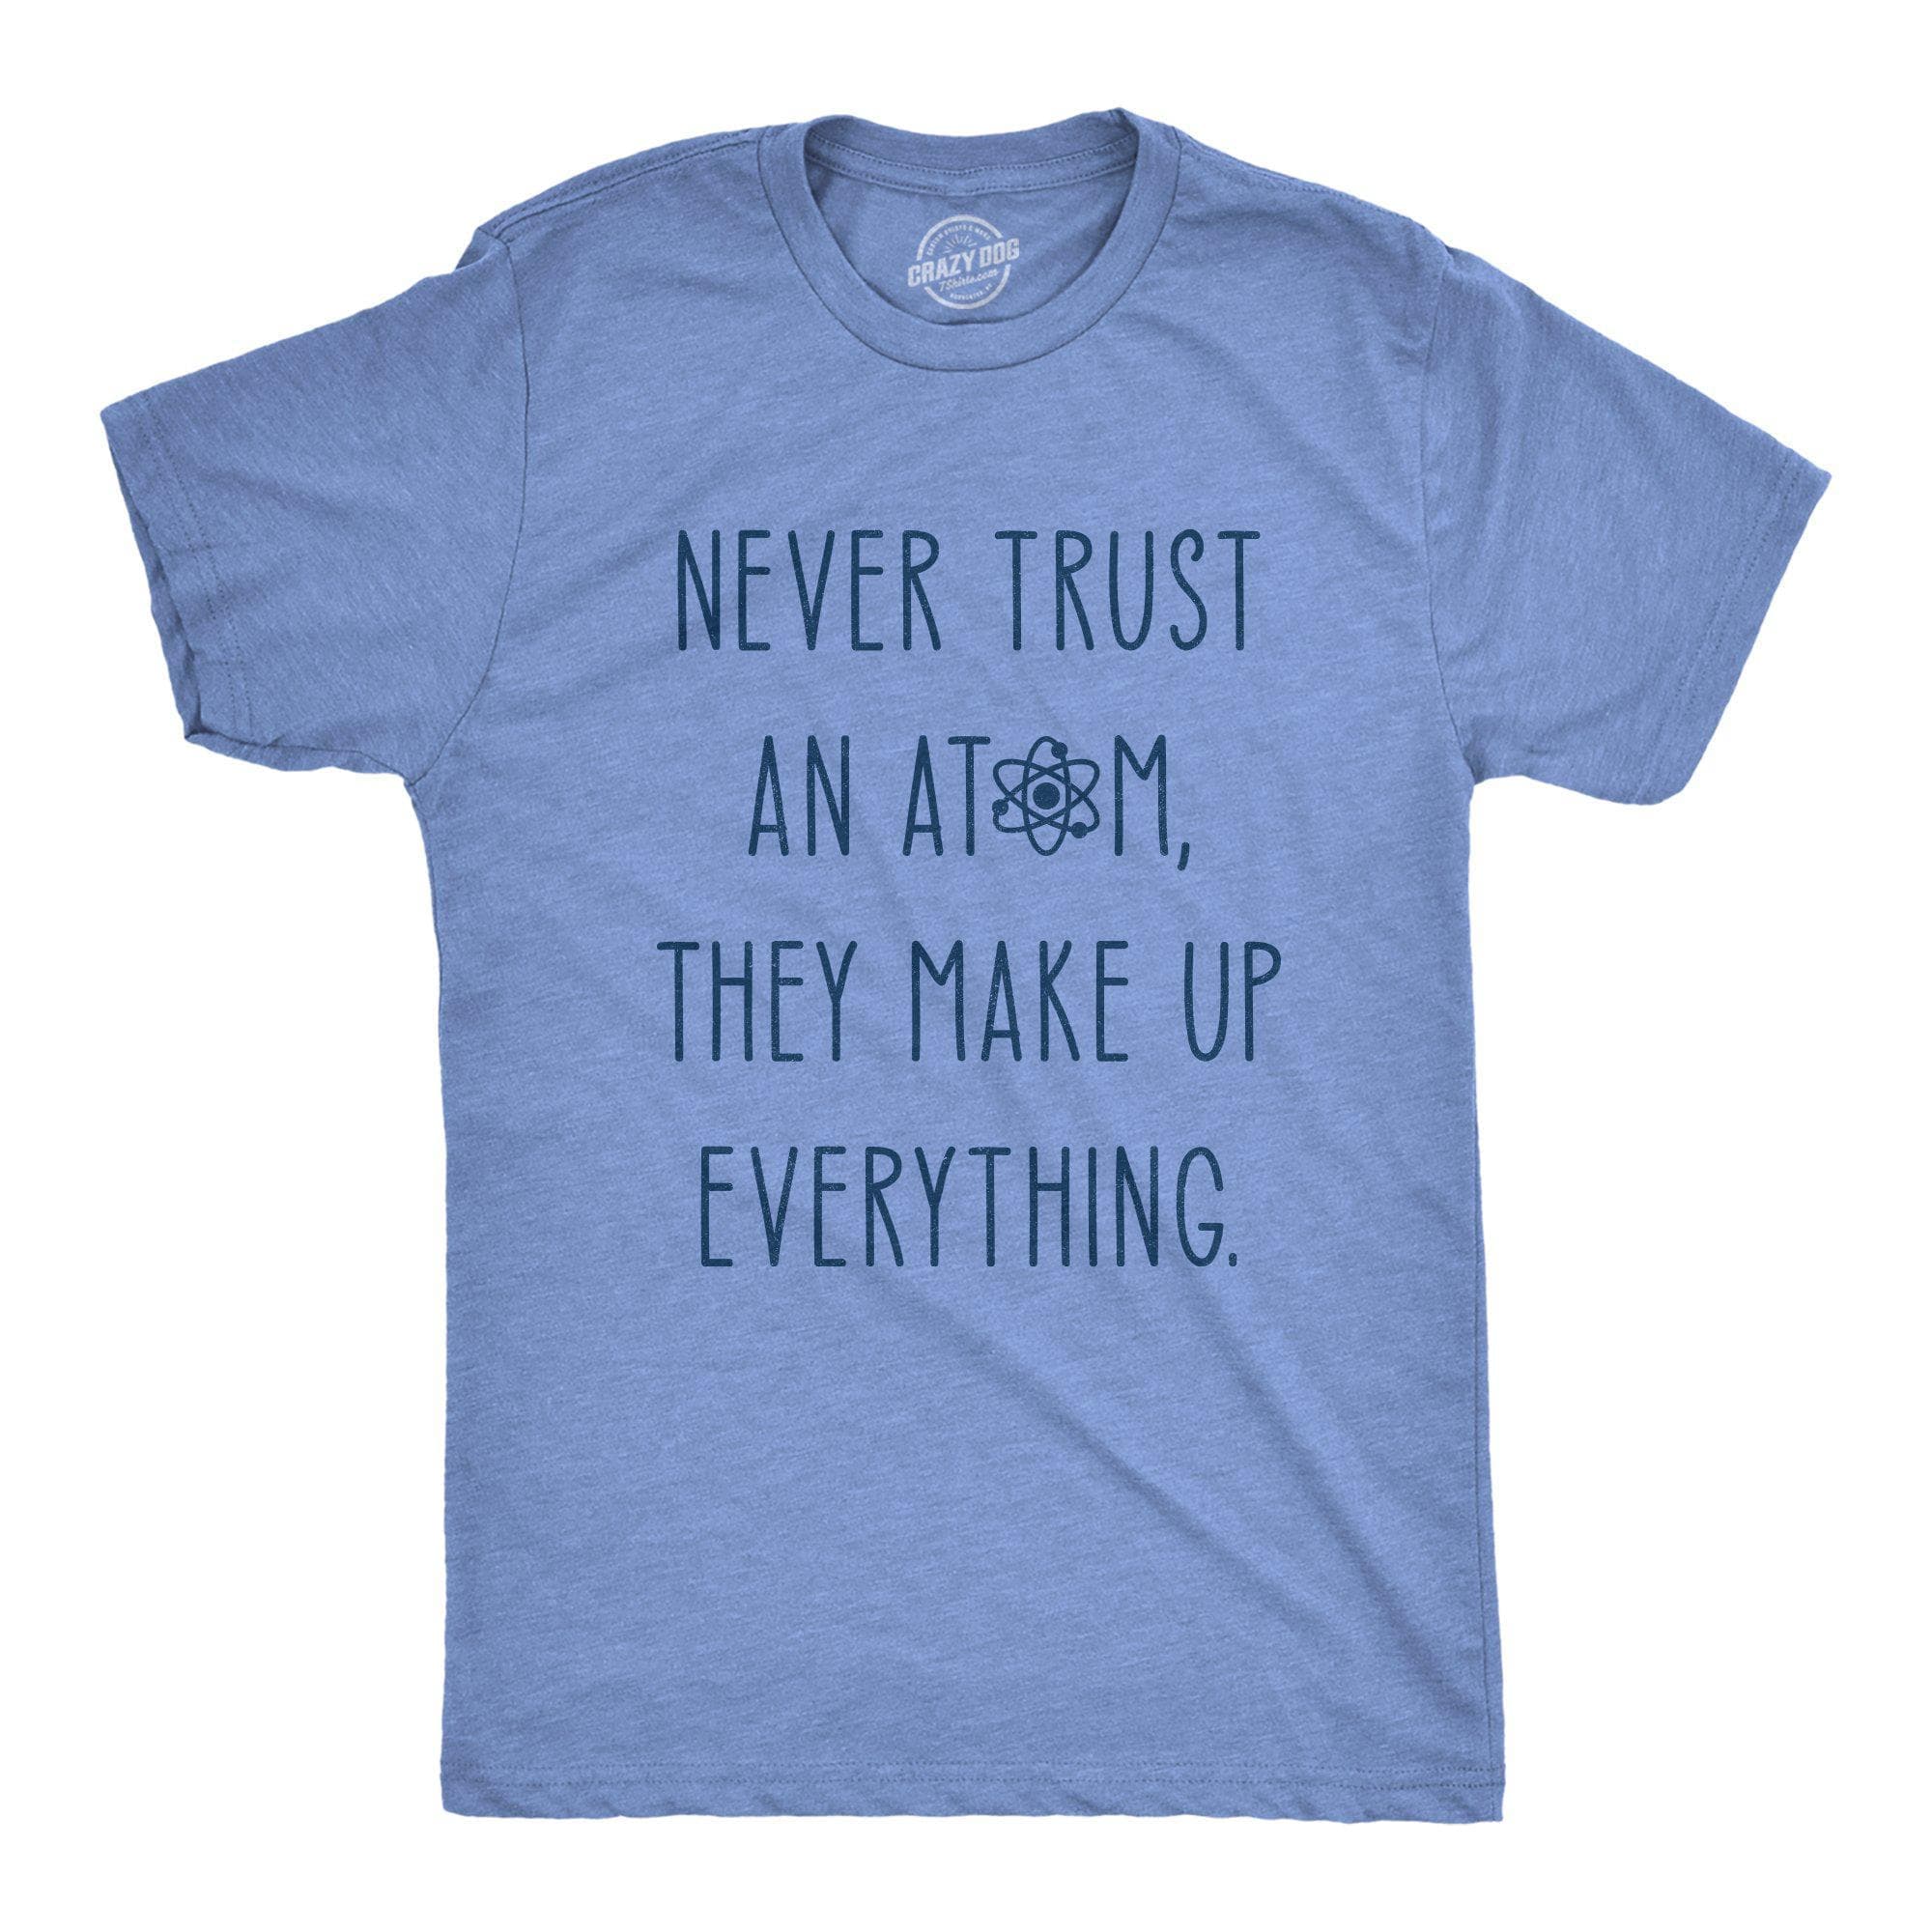 Never Trust An Atom Men's Tshirt - Crazy Dog T-Shirts